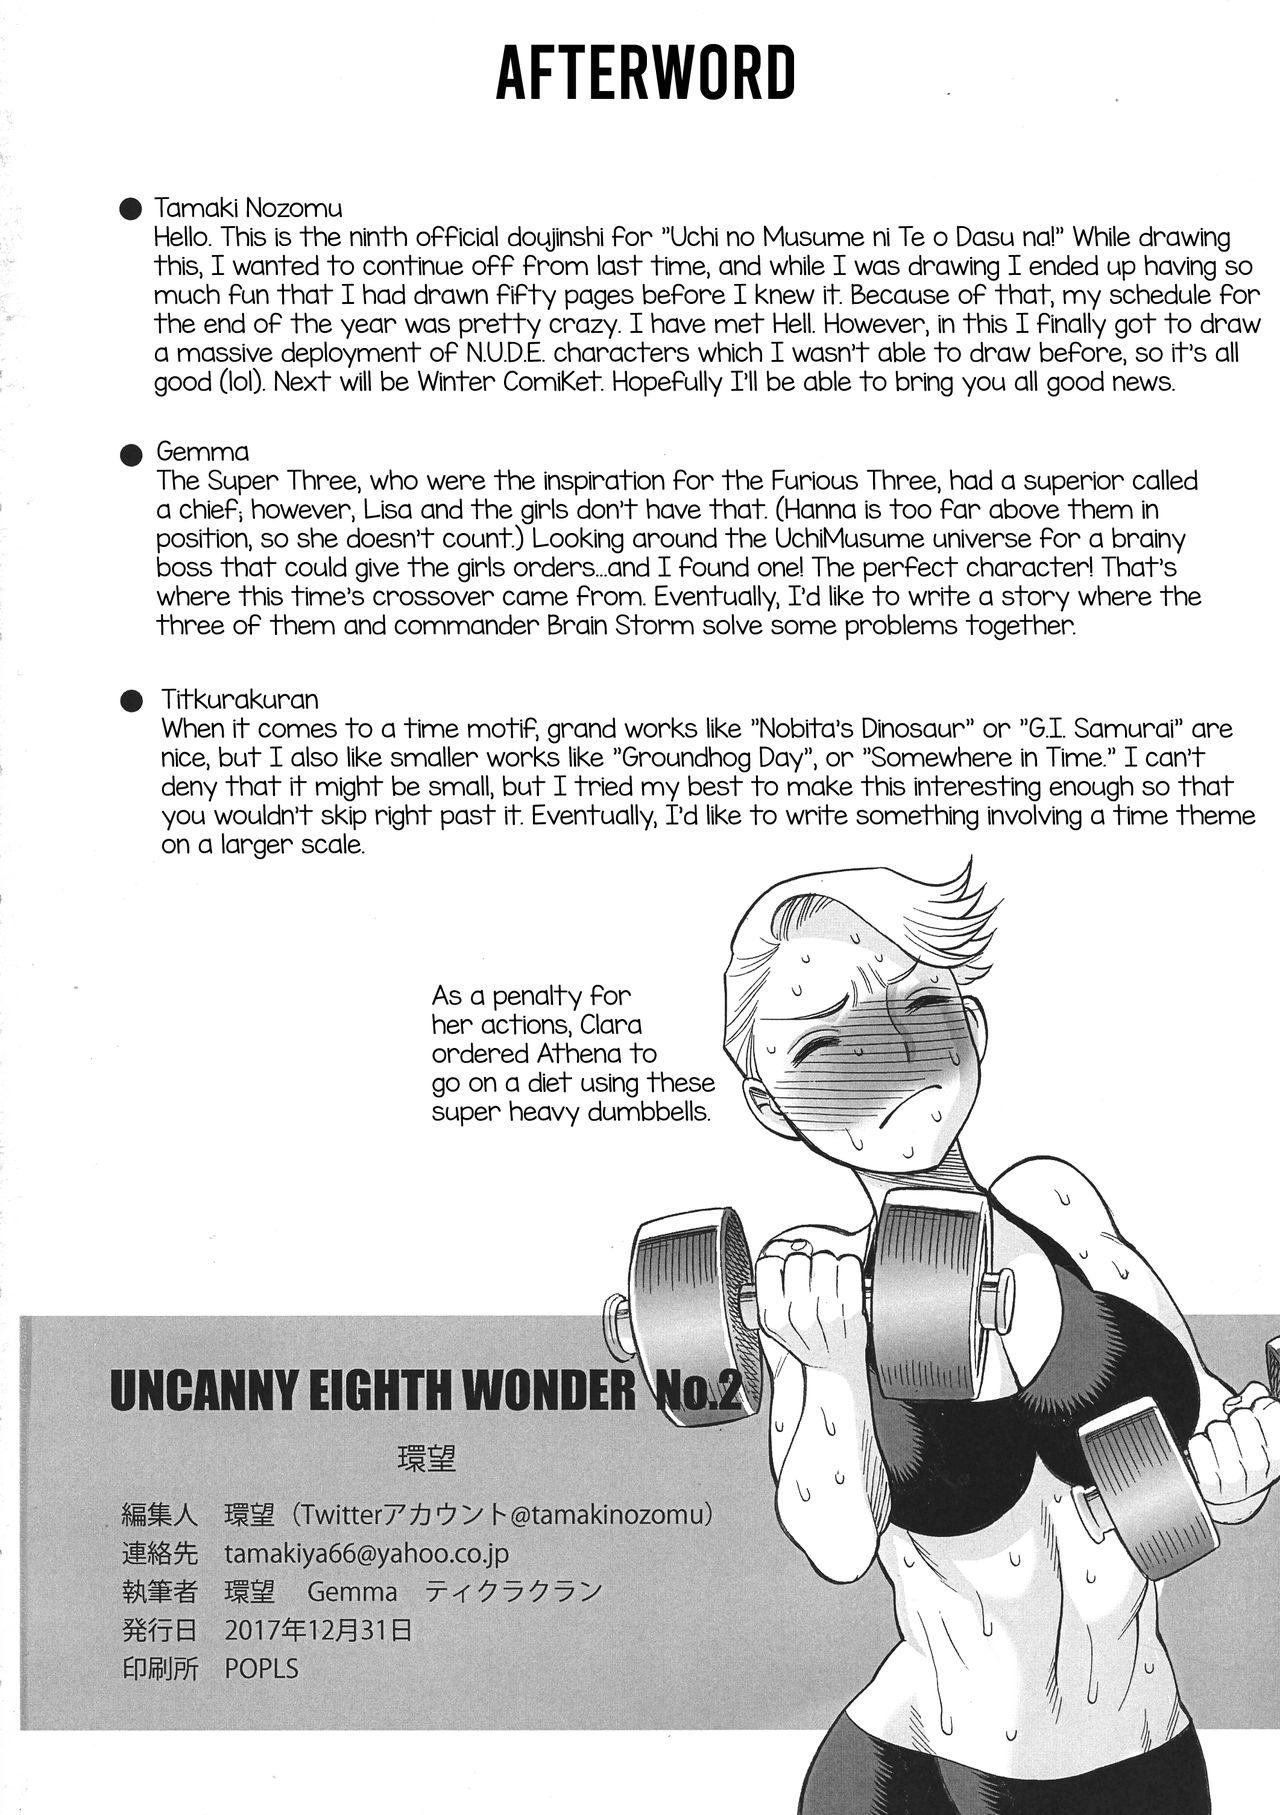 Farting Uncanny EIGHTHWONDER No.2 - Uchi no musume ni te o dasuna Gay Friend - Page 55